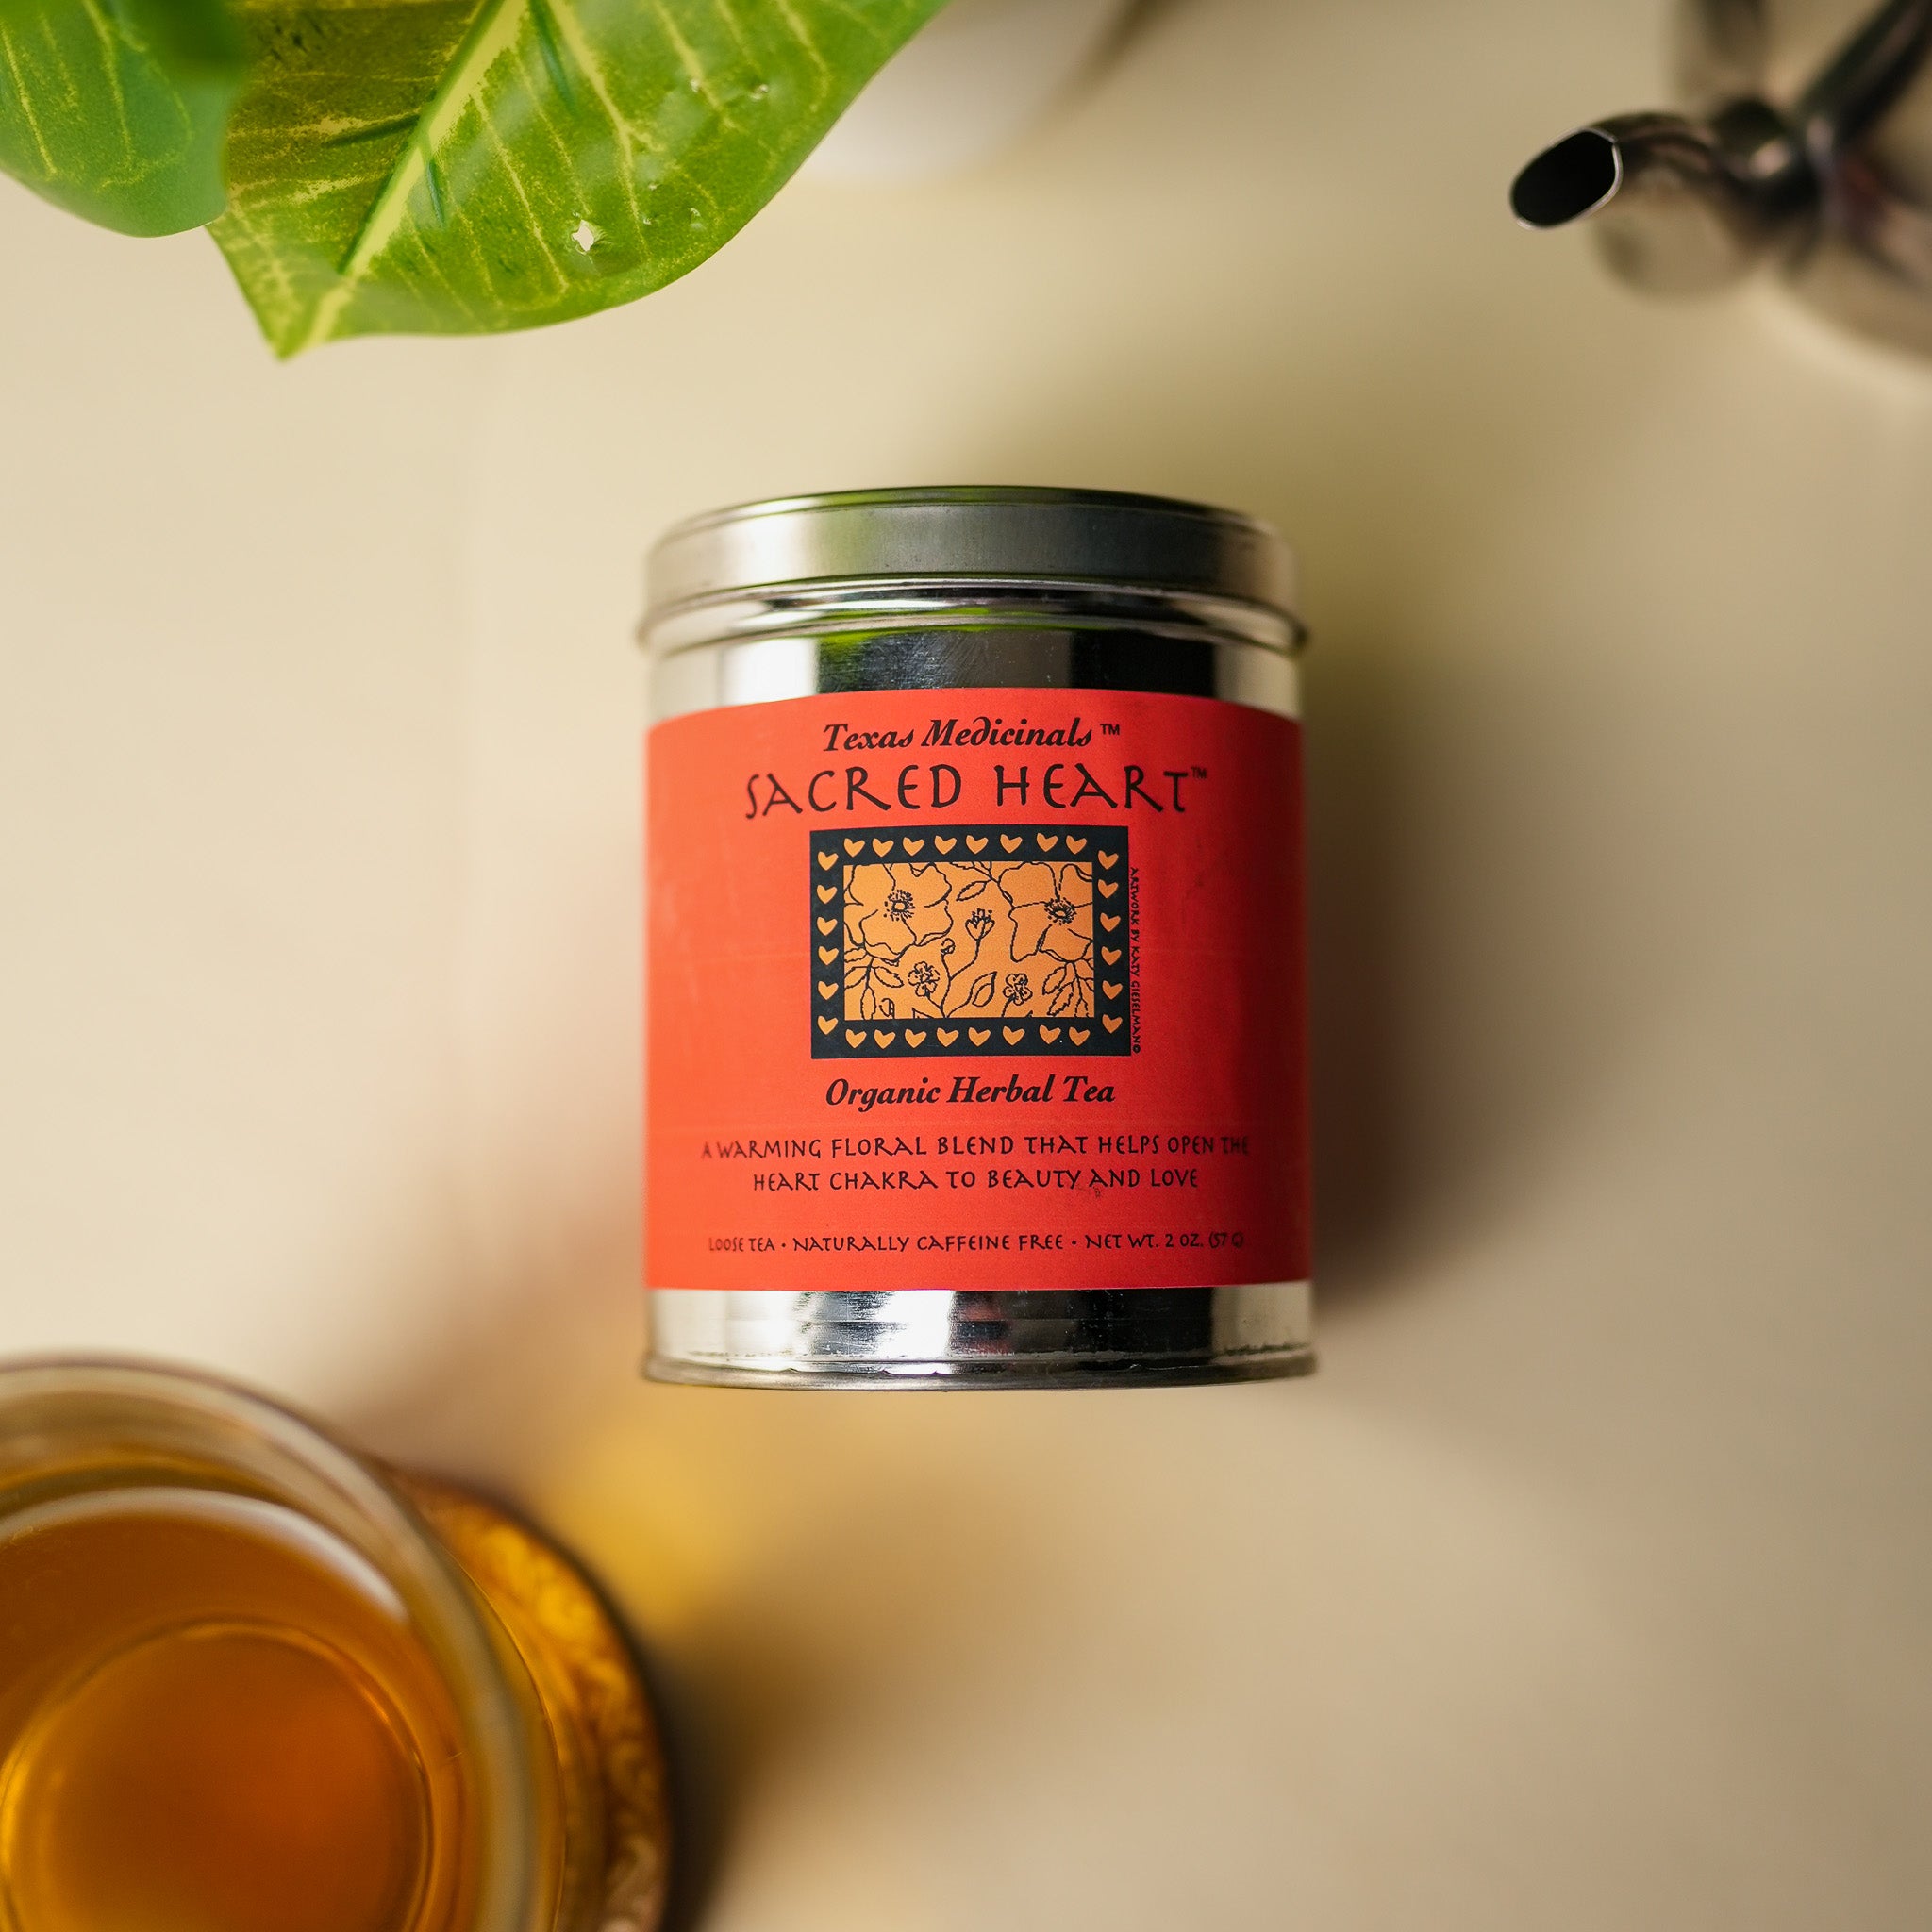 Sacred Heart Organic Herbal Tea